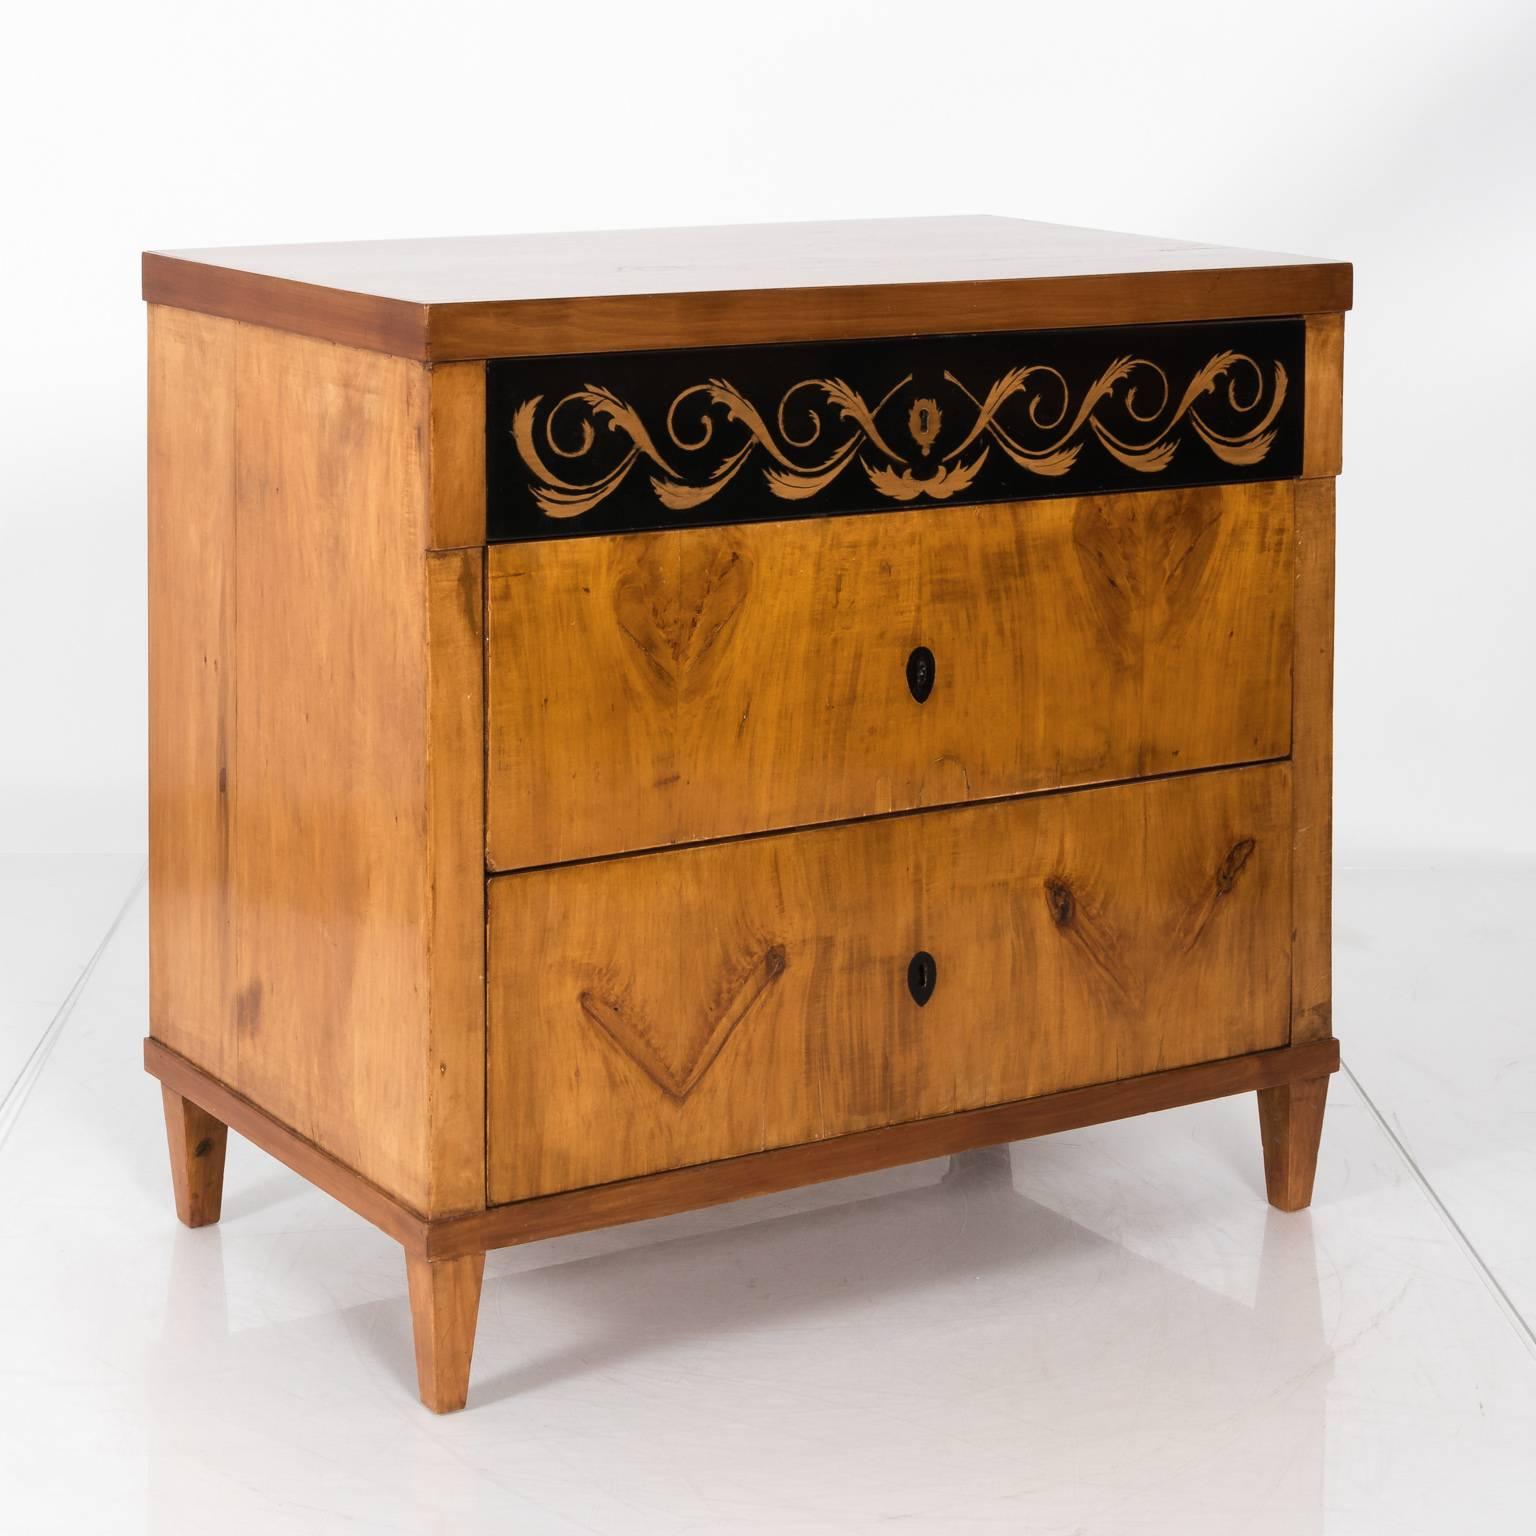 Circa 1820 Biedermeier three-drawer chest with inlay scroll marquetry.
